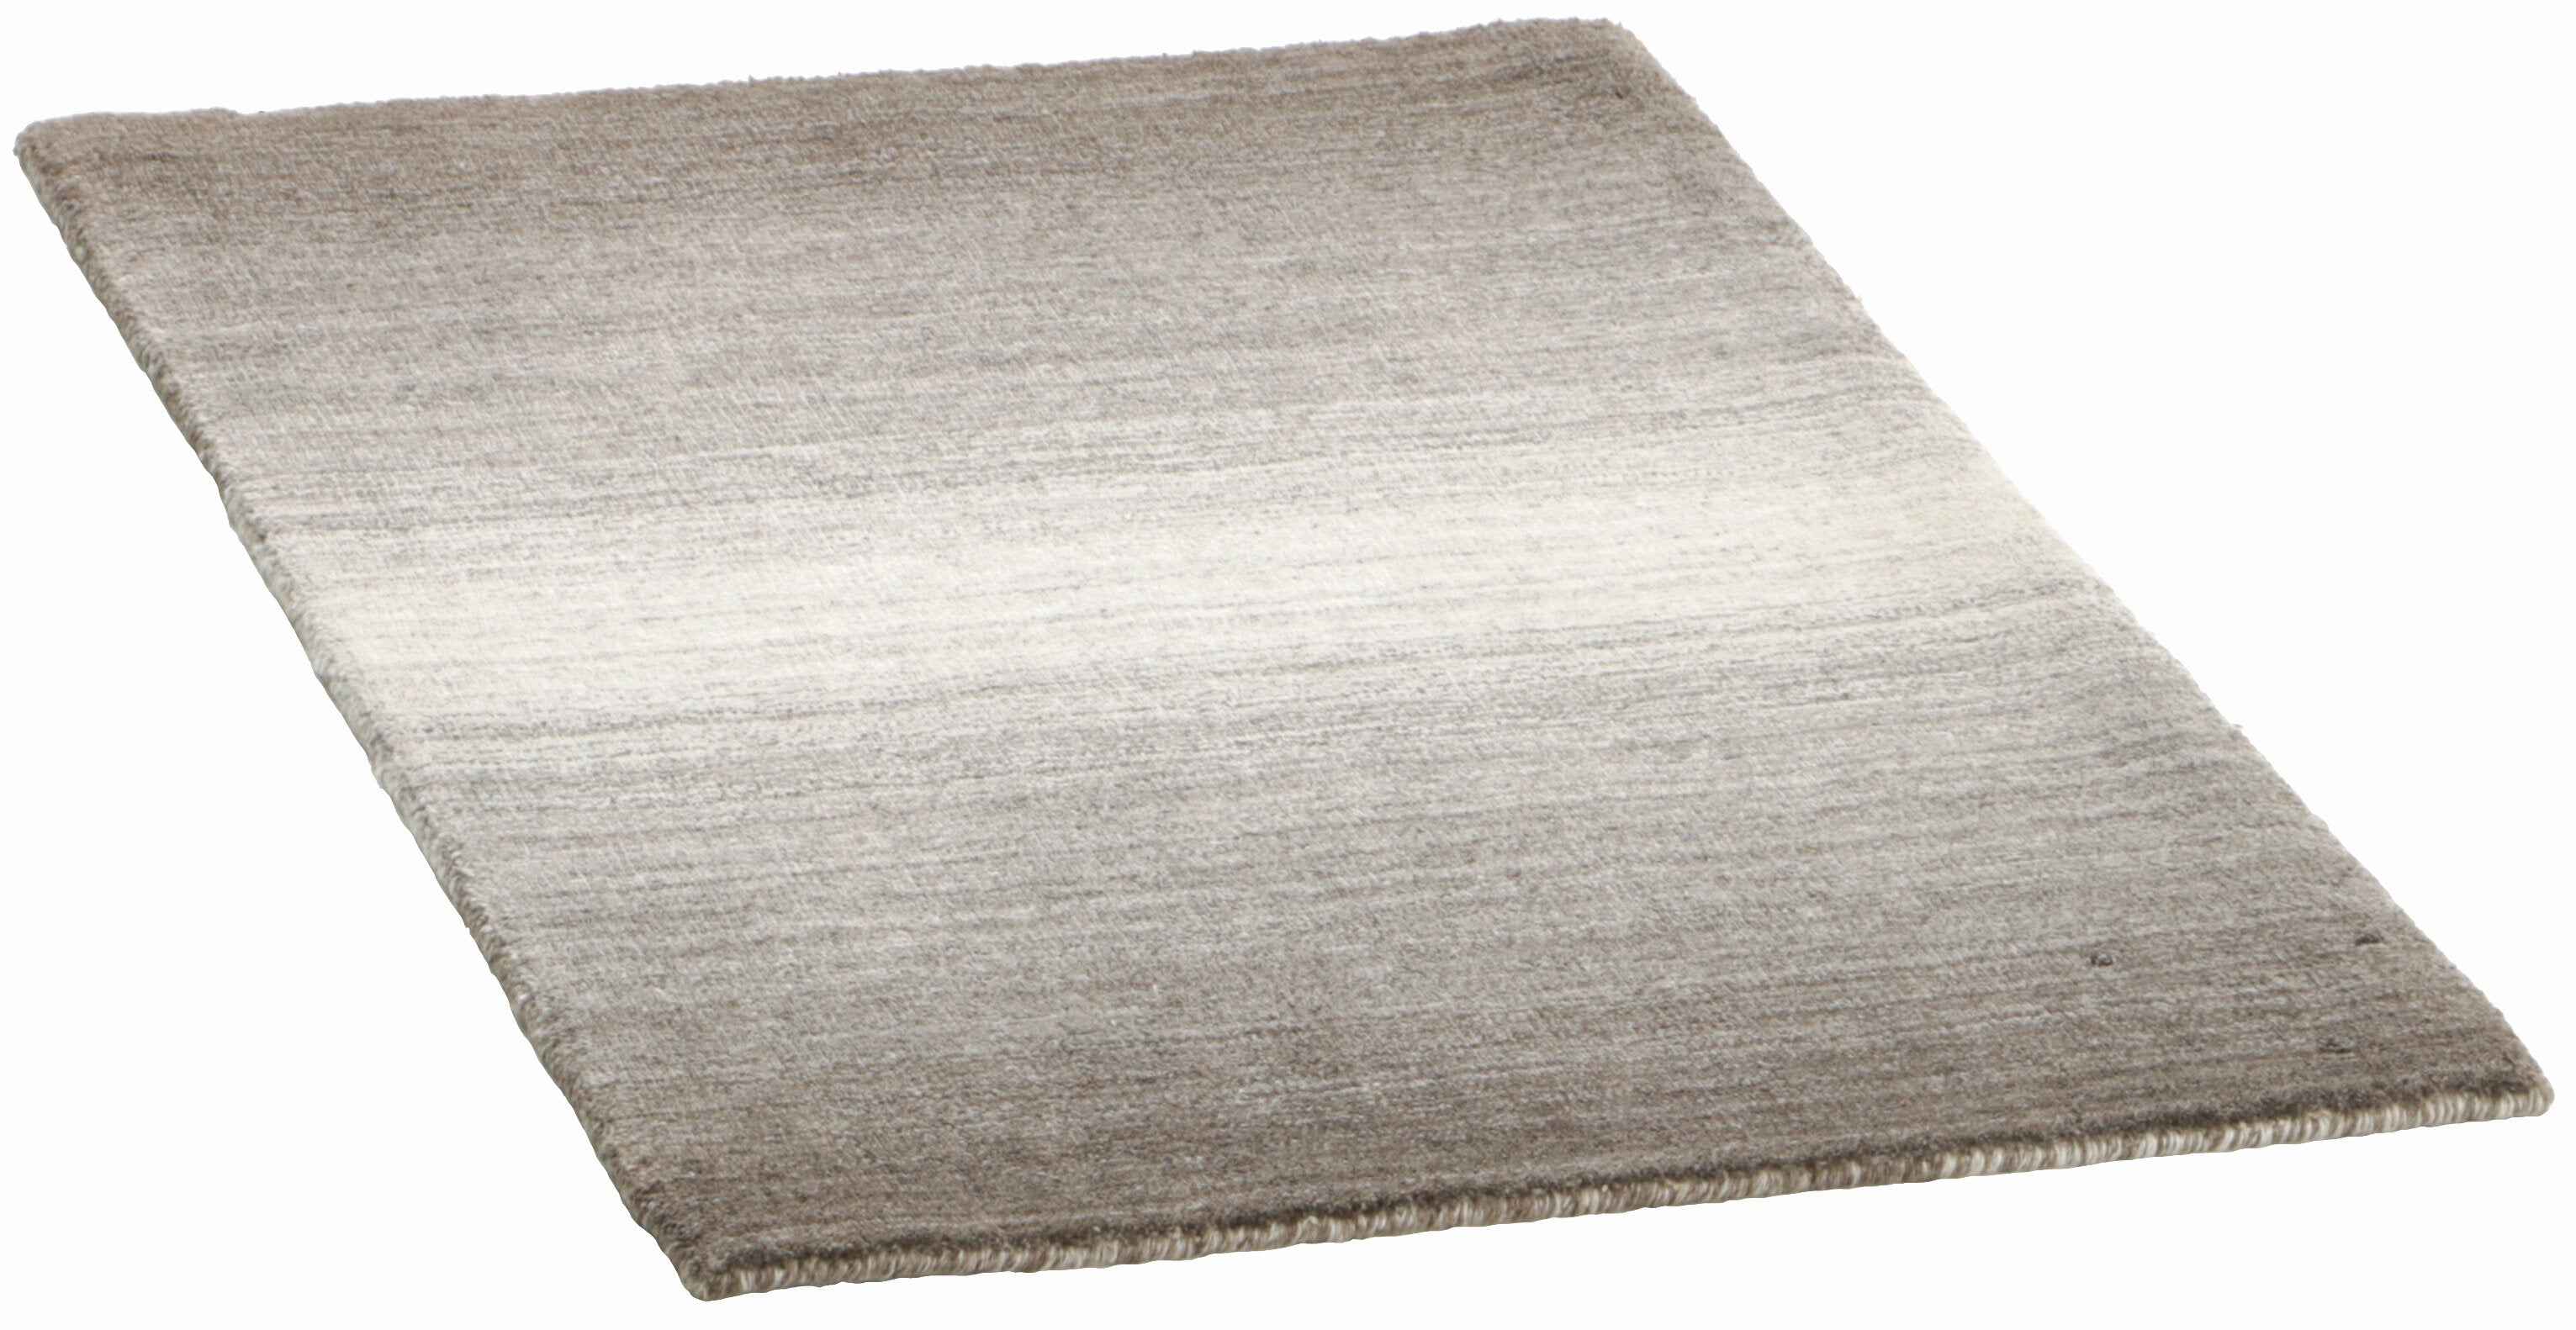 400 x 400 cm Indian Wool/Viscose Brown Rug-Gris, Grey - Rugmaster